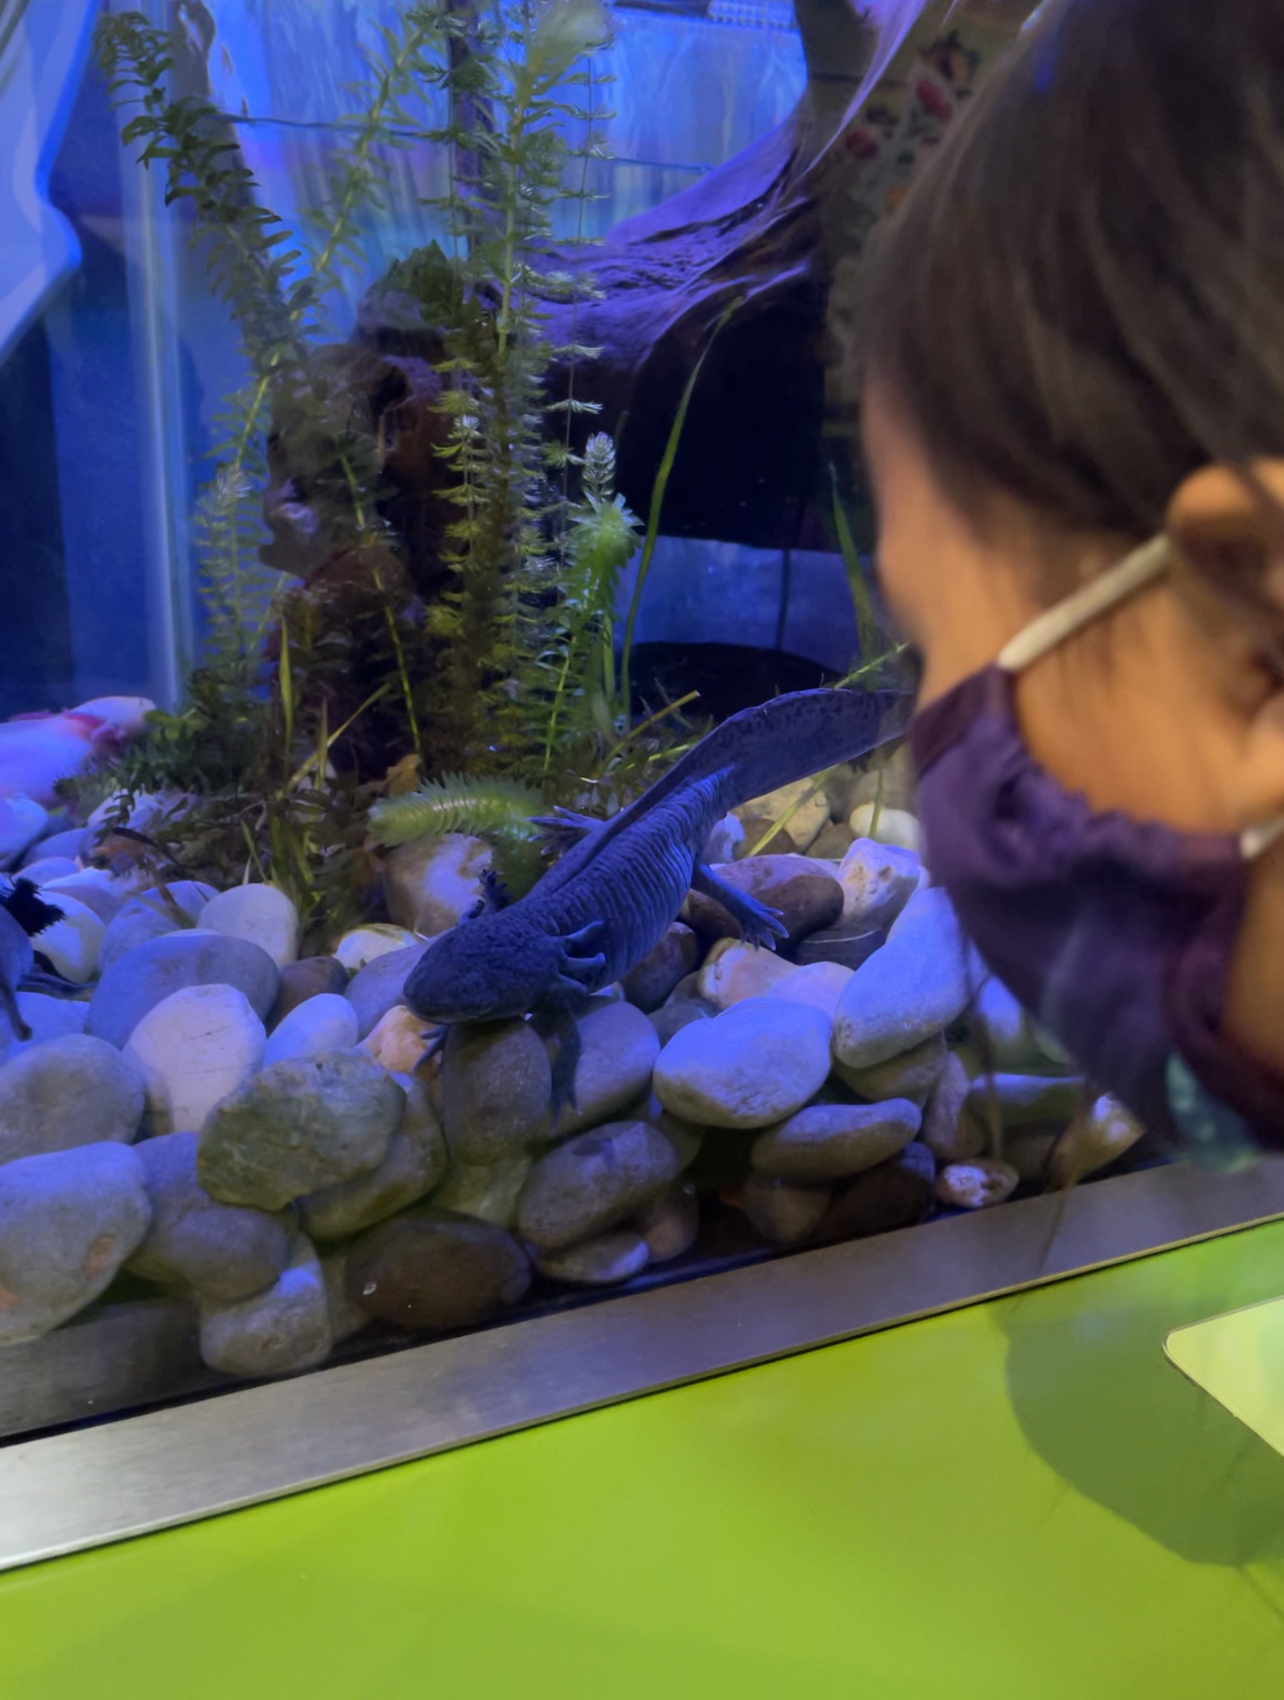 A child peeks into a fish tank to look at a dark grey axolotl.